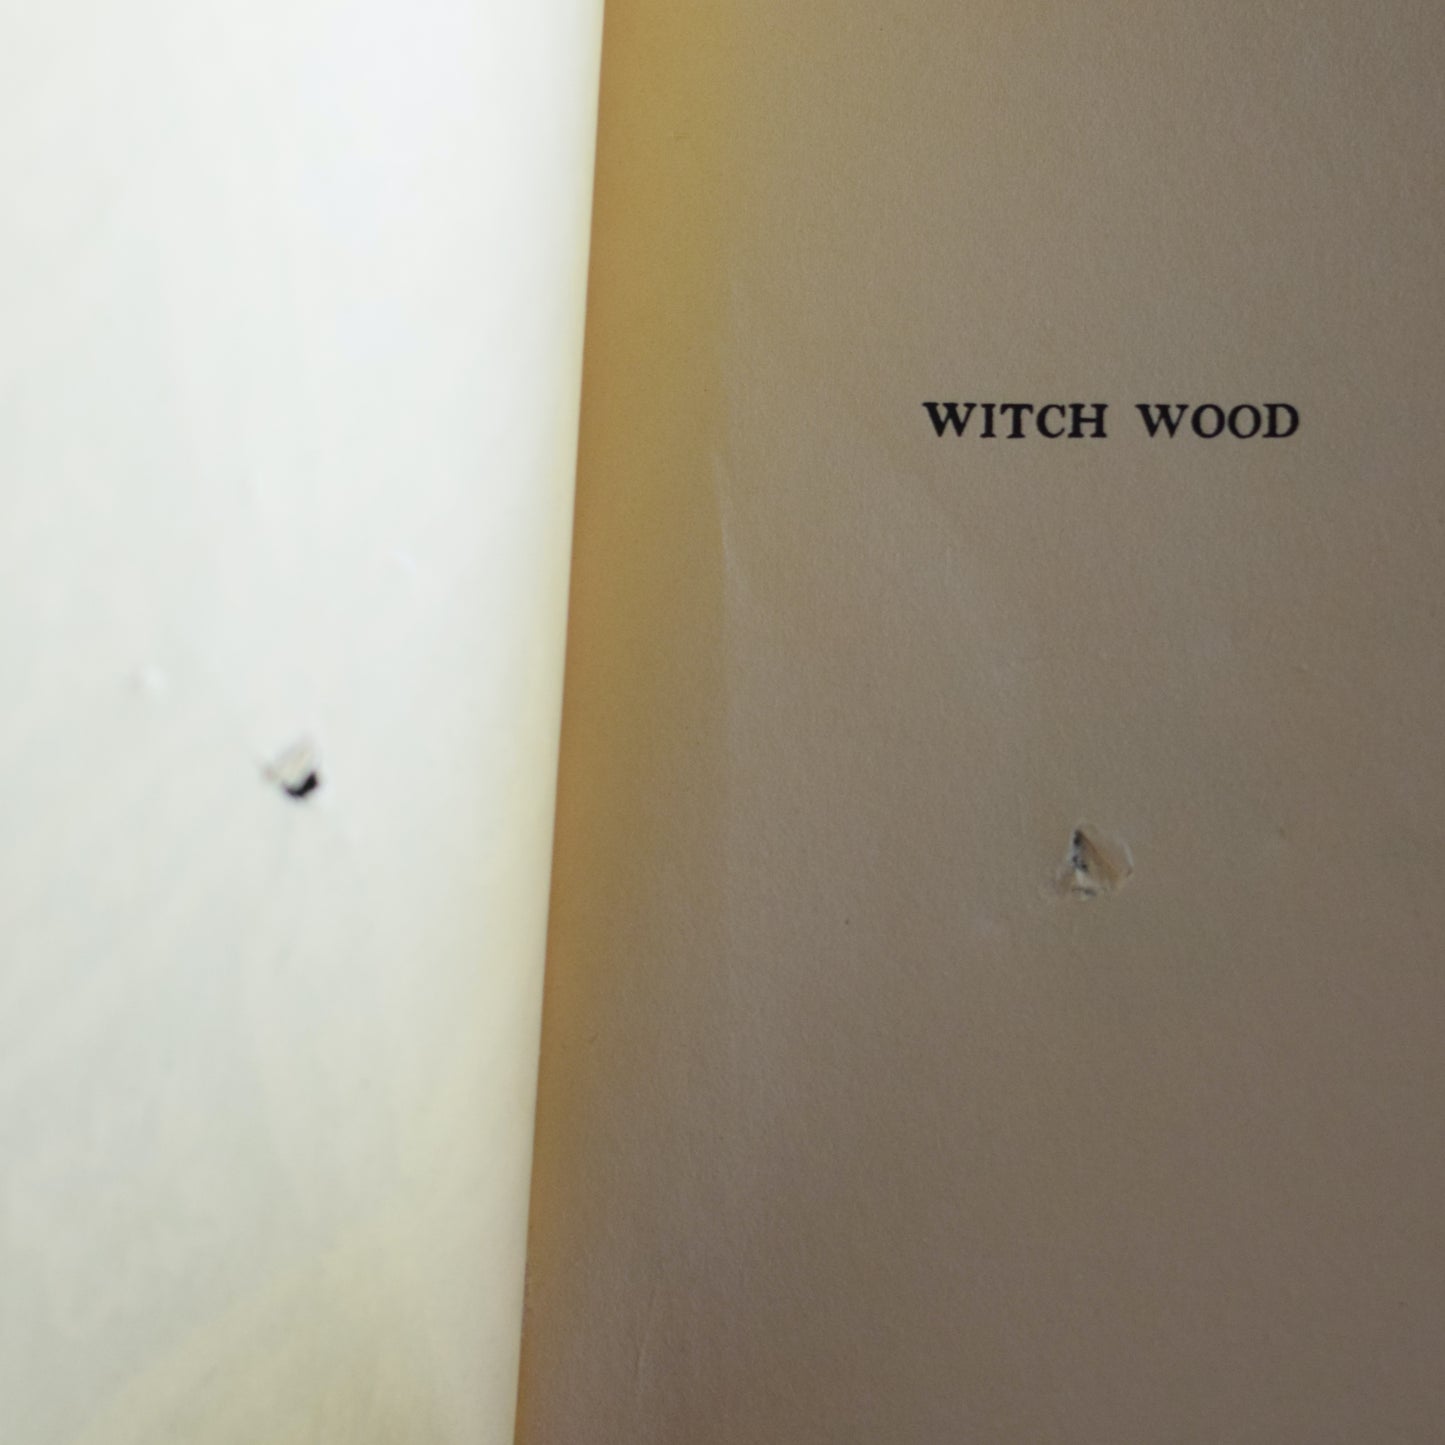 Vintage Fiction Hardback: John Buchan - Witch Wood '1027' FIRST EDITION